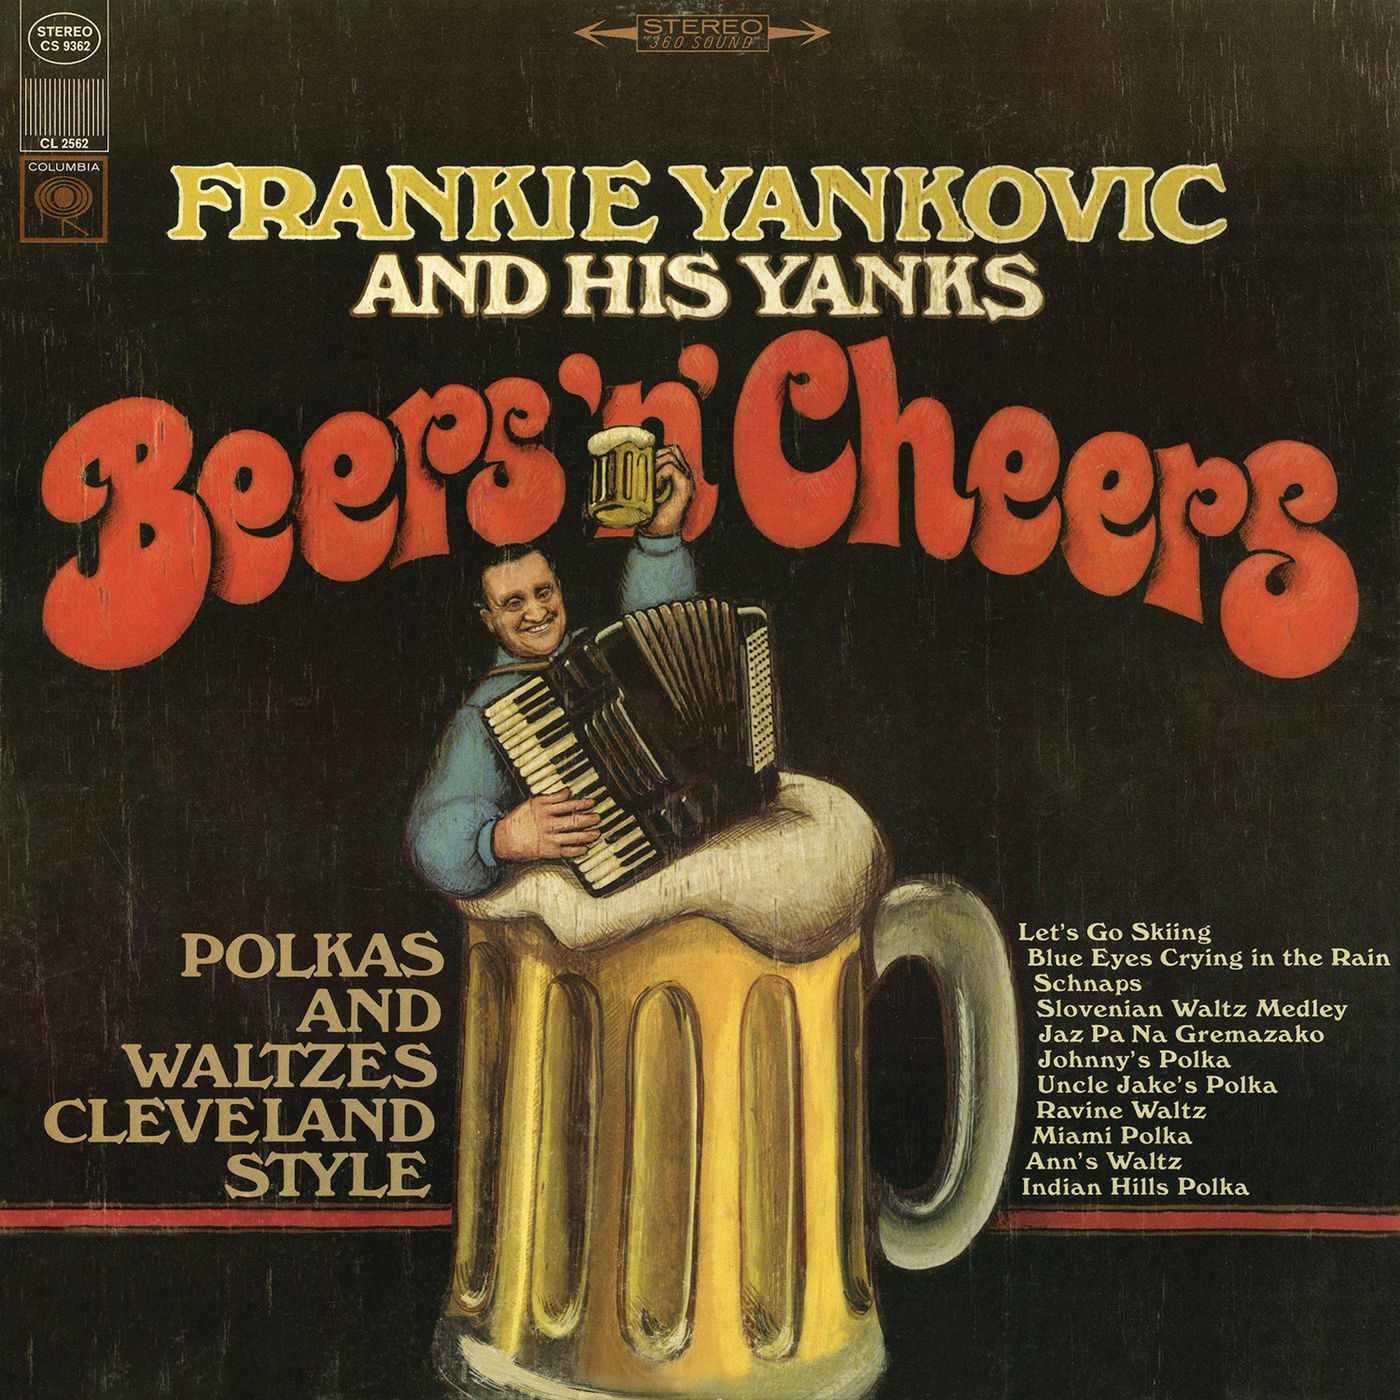 Frankie Yankovic and His Yanks – Beers ‘N’ Cheers- Polkas and Waltzes Cleveland Style